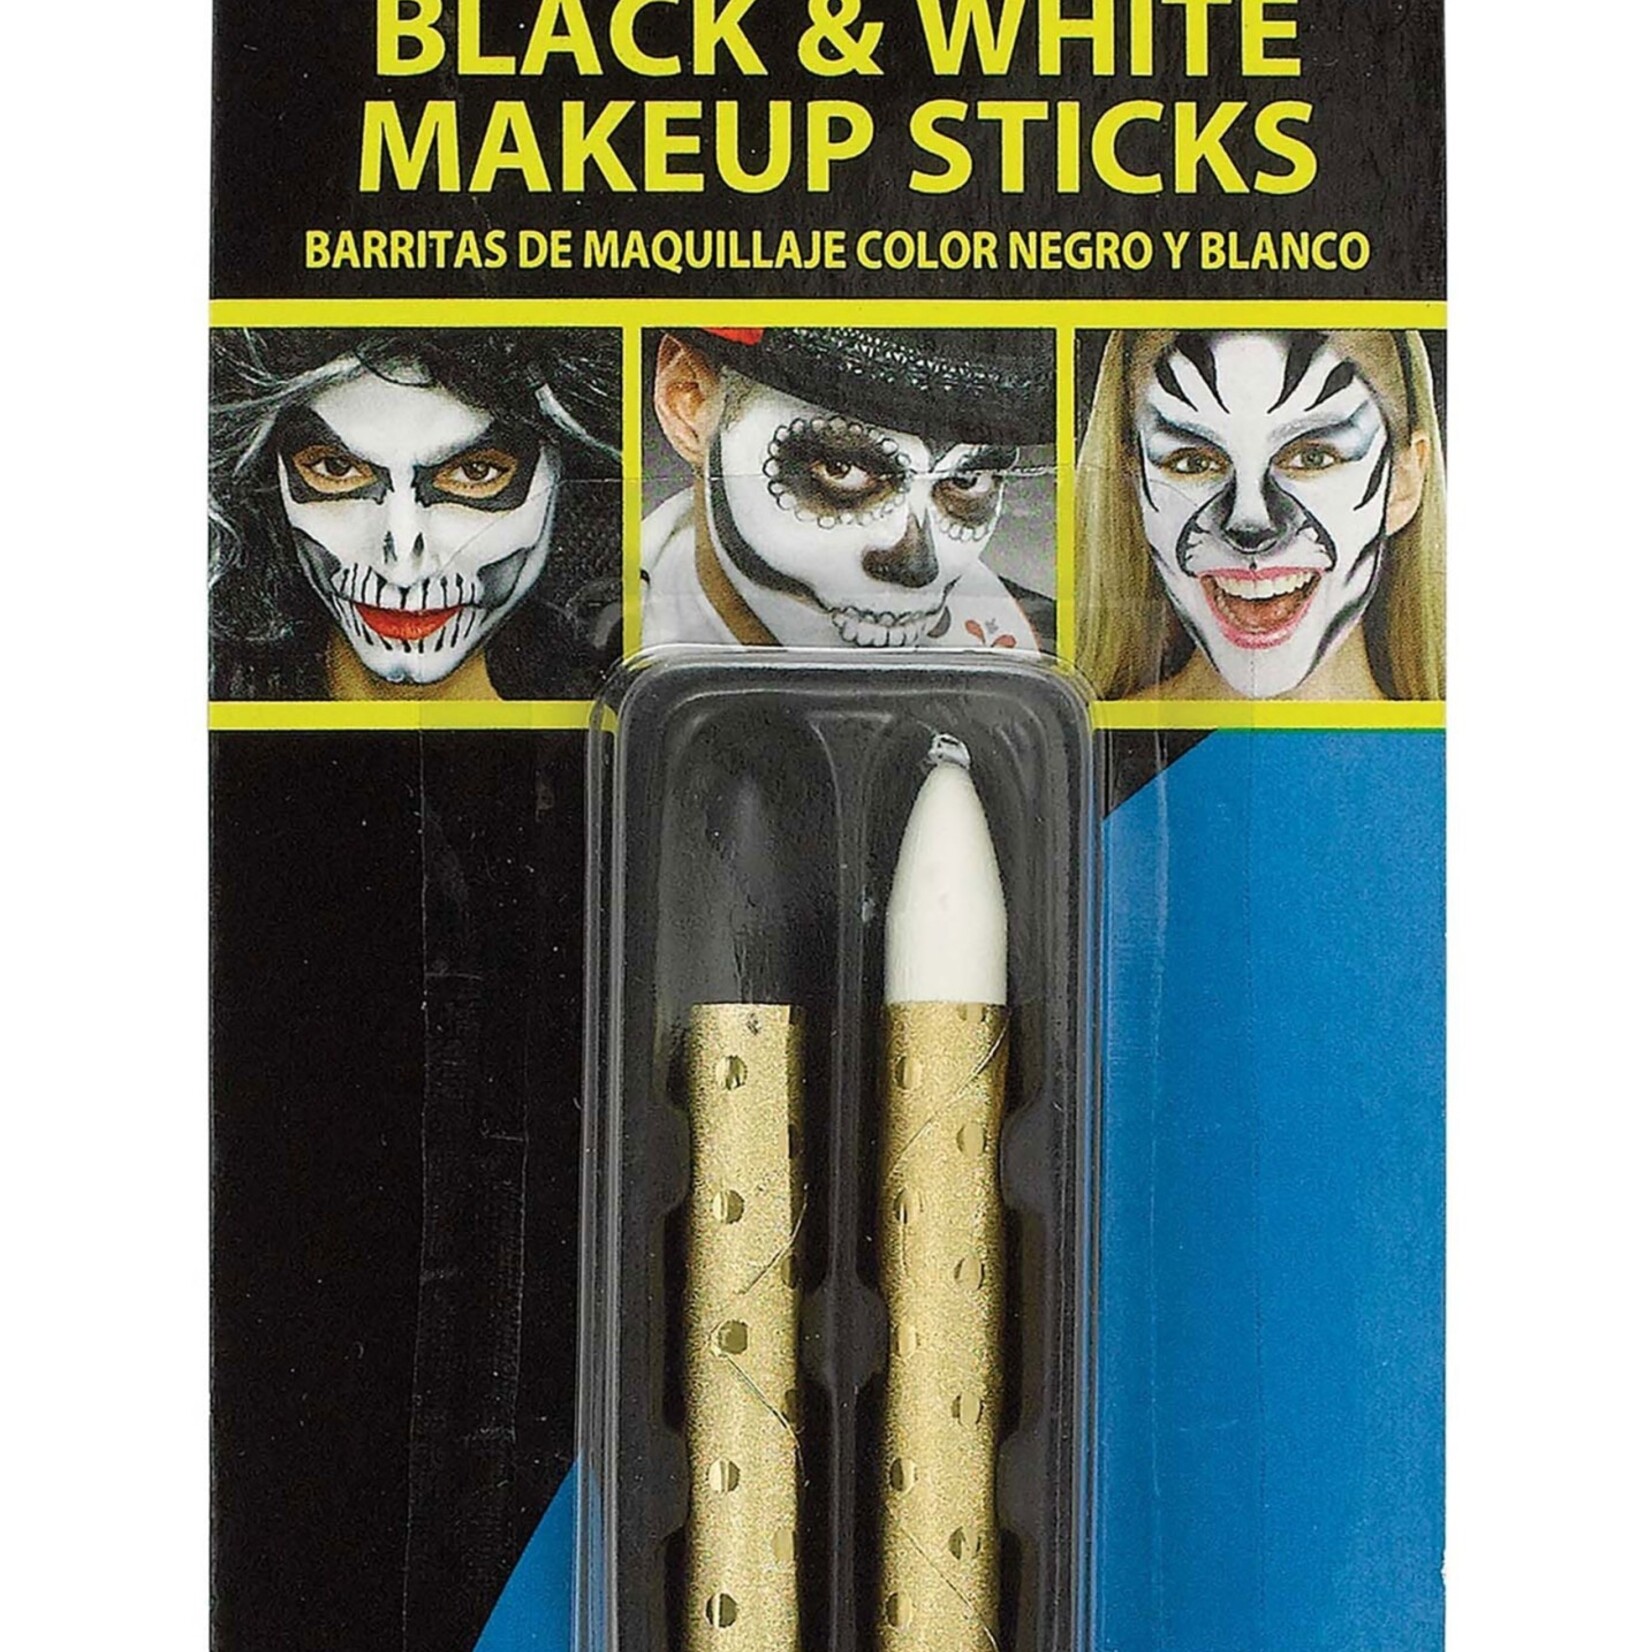 Black and White Makeup Sticks